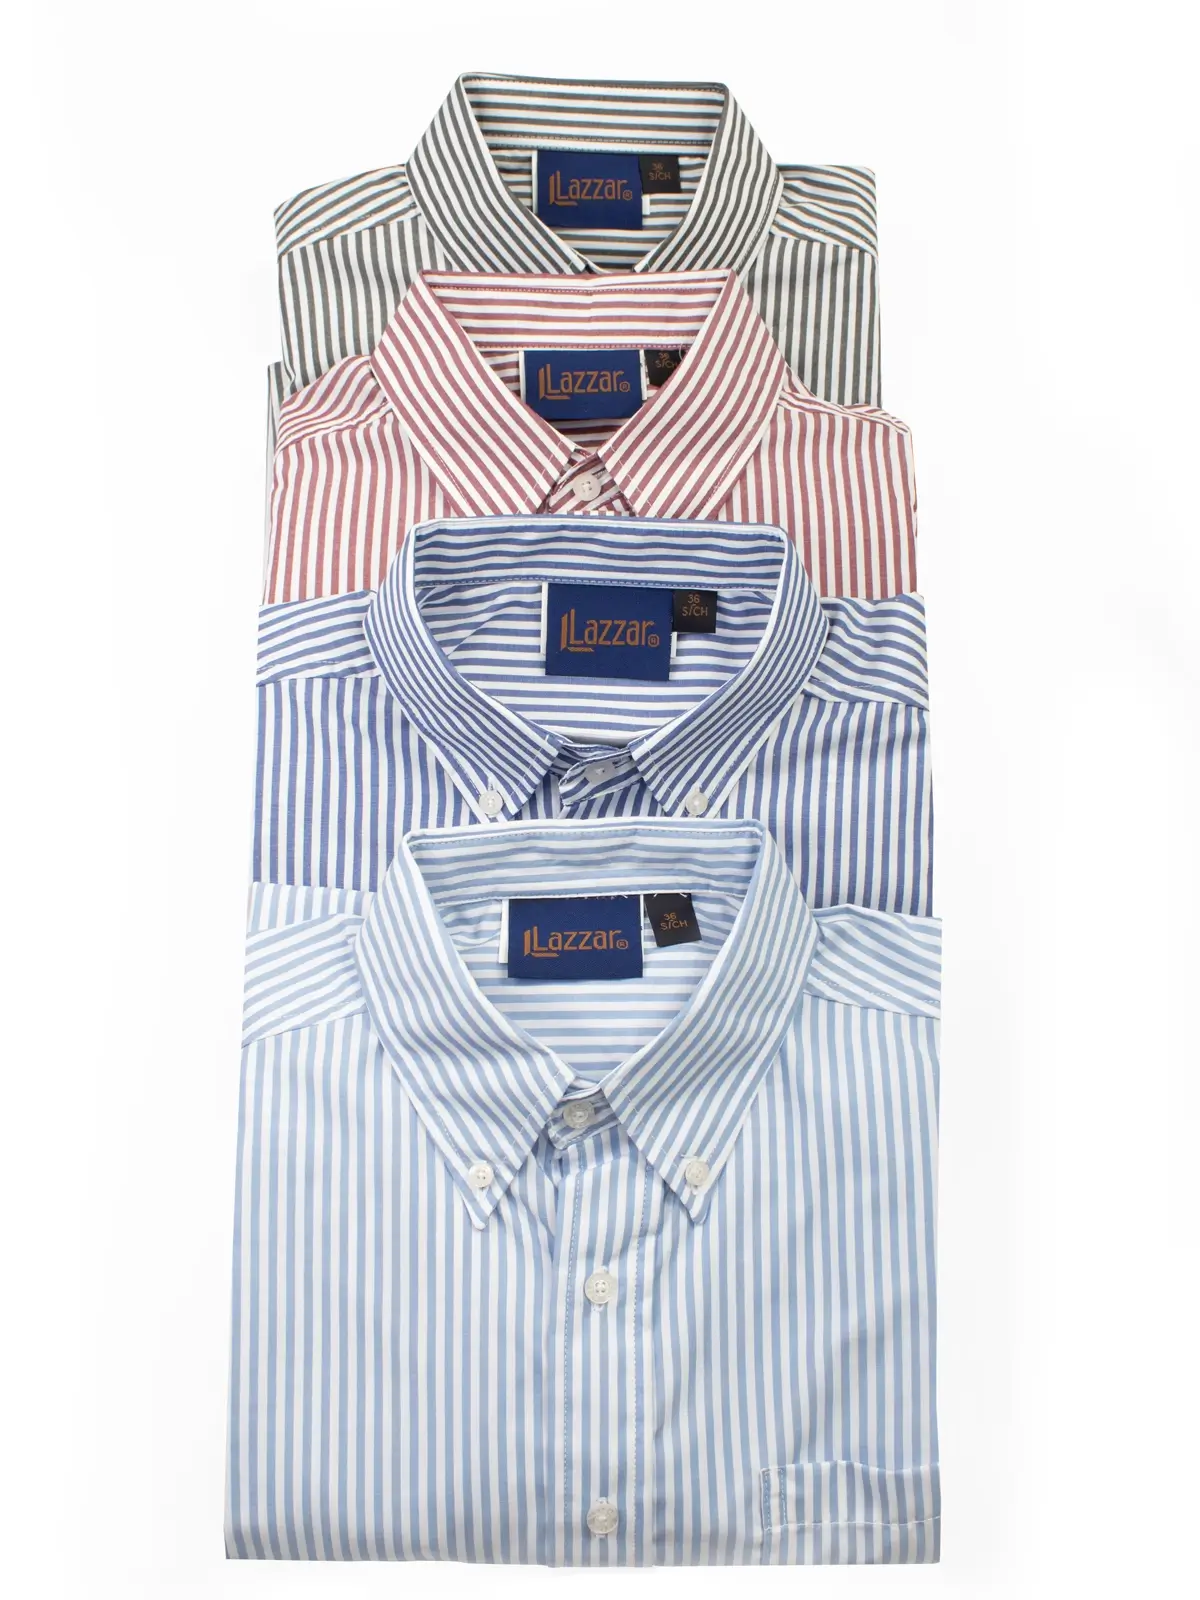 Striped Shirt colors